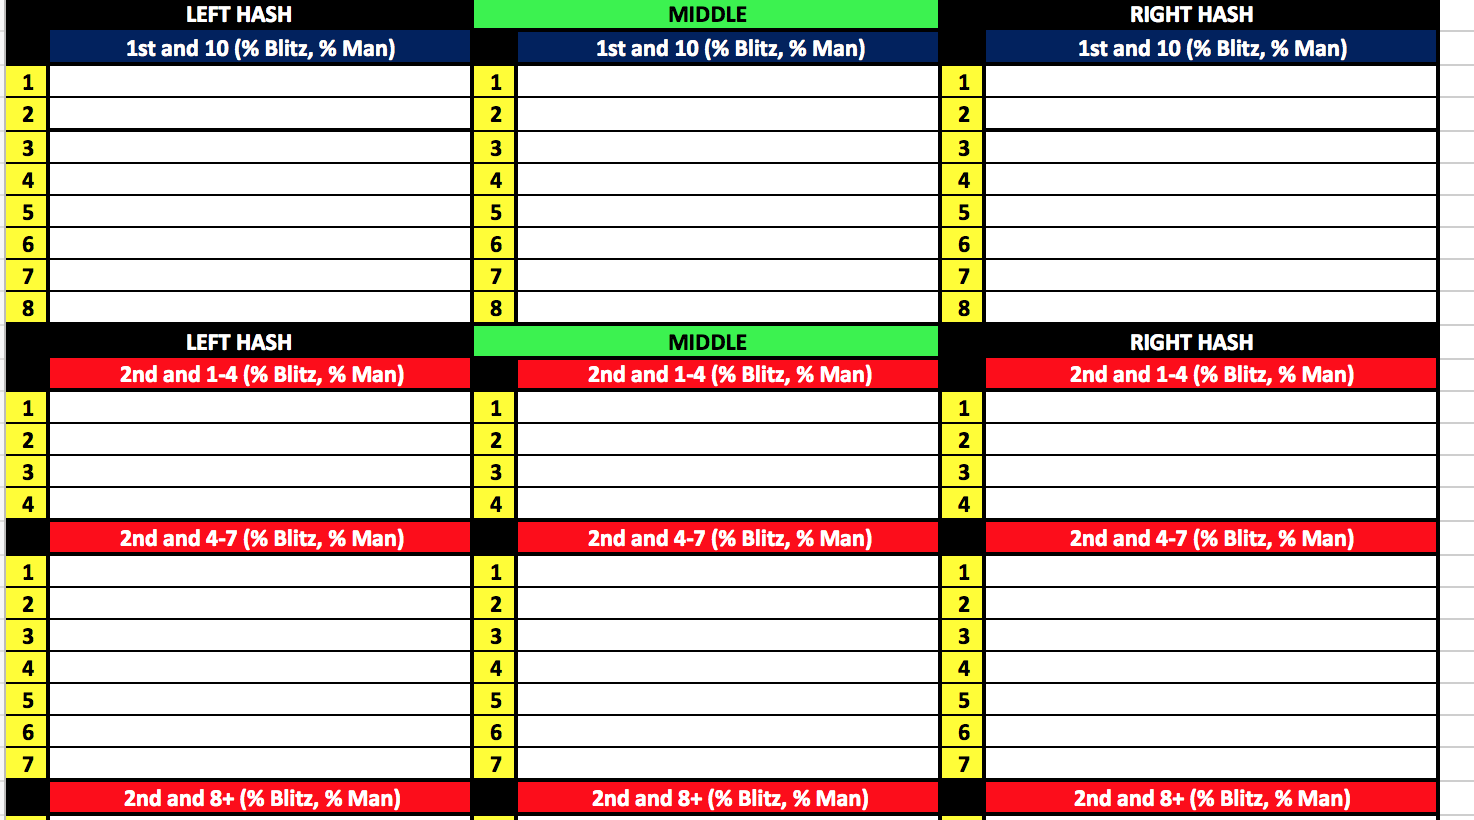 Football Call Sheet Template Excel